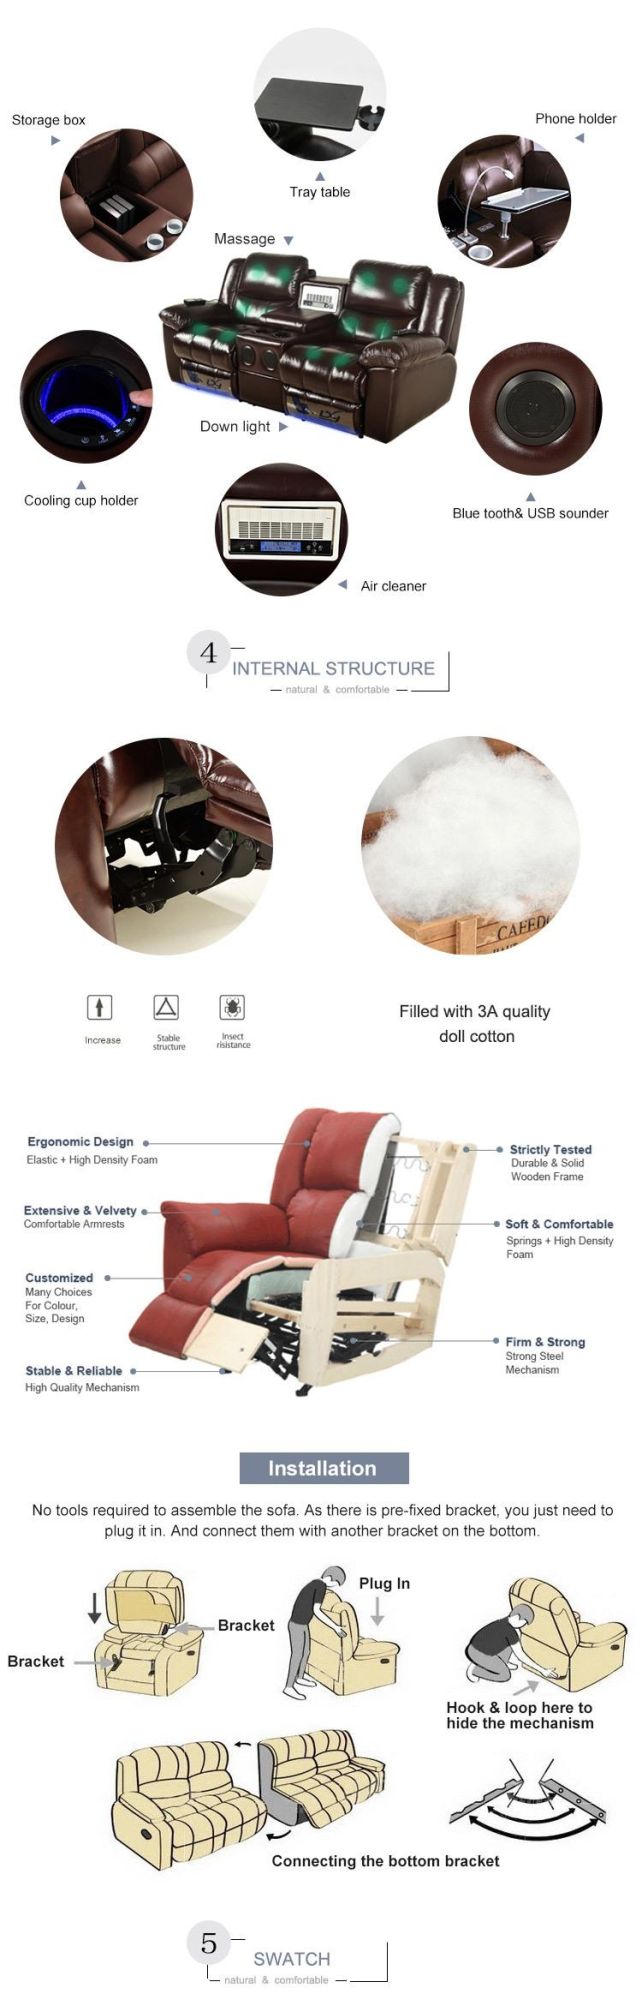 New Design Black Colour Classic Cinema Recliner Chair Foshan Sofa Furniture